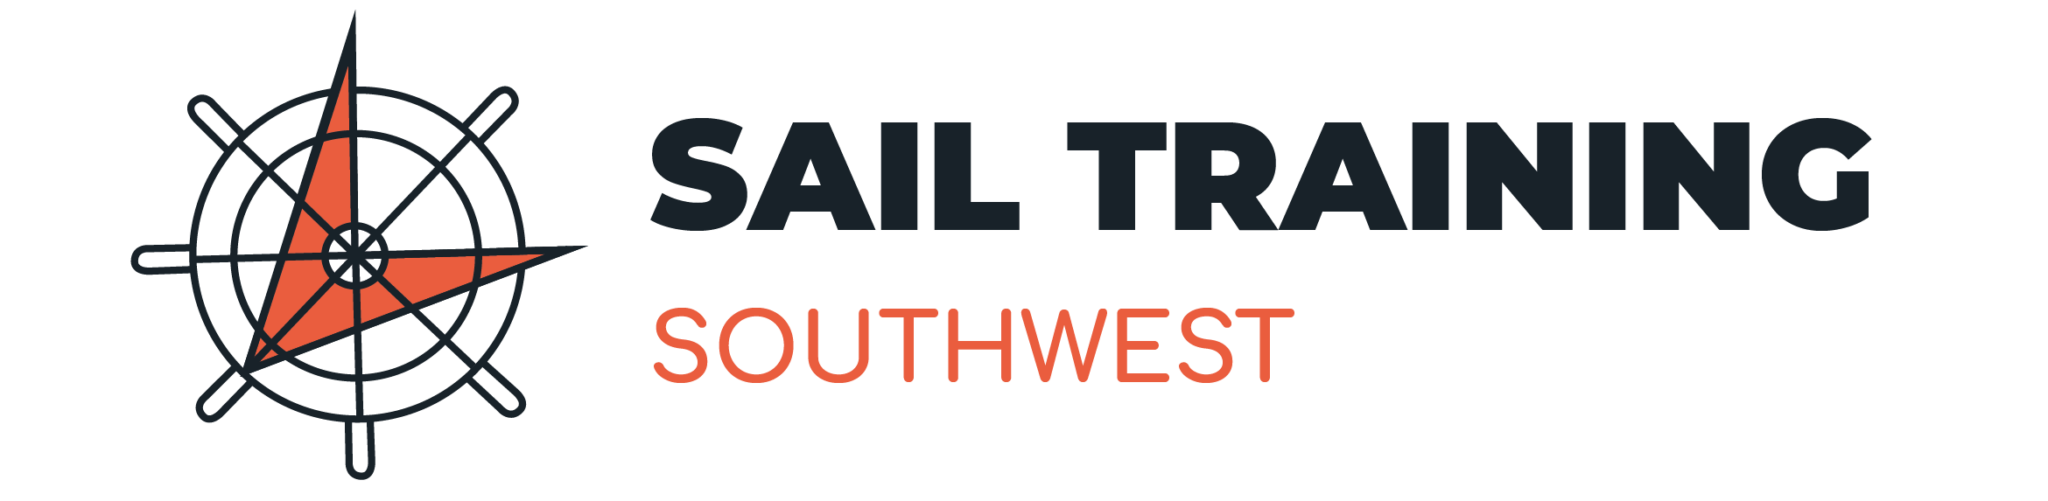 Sail Training South West logo